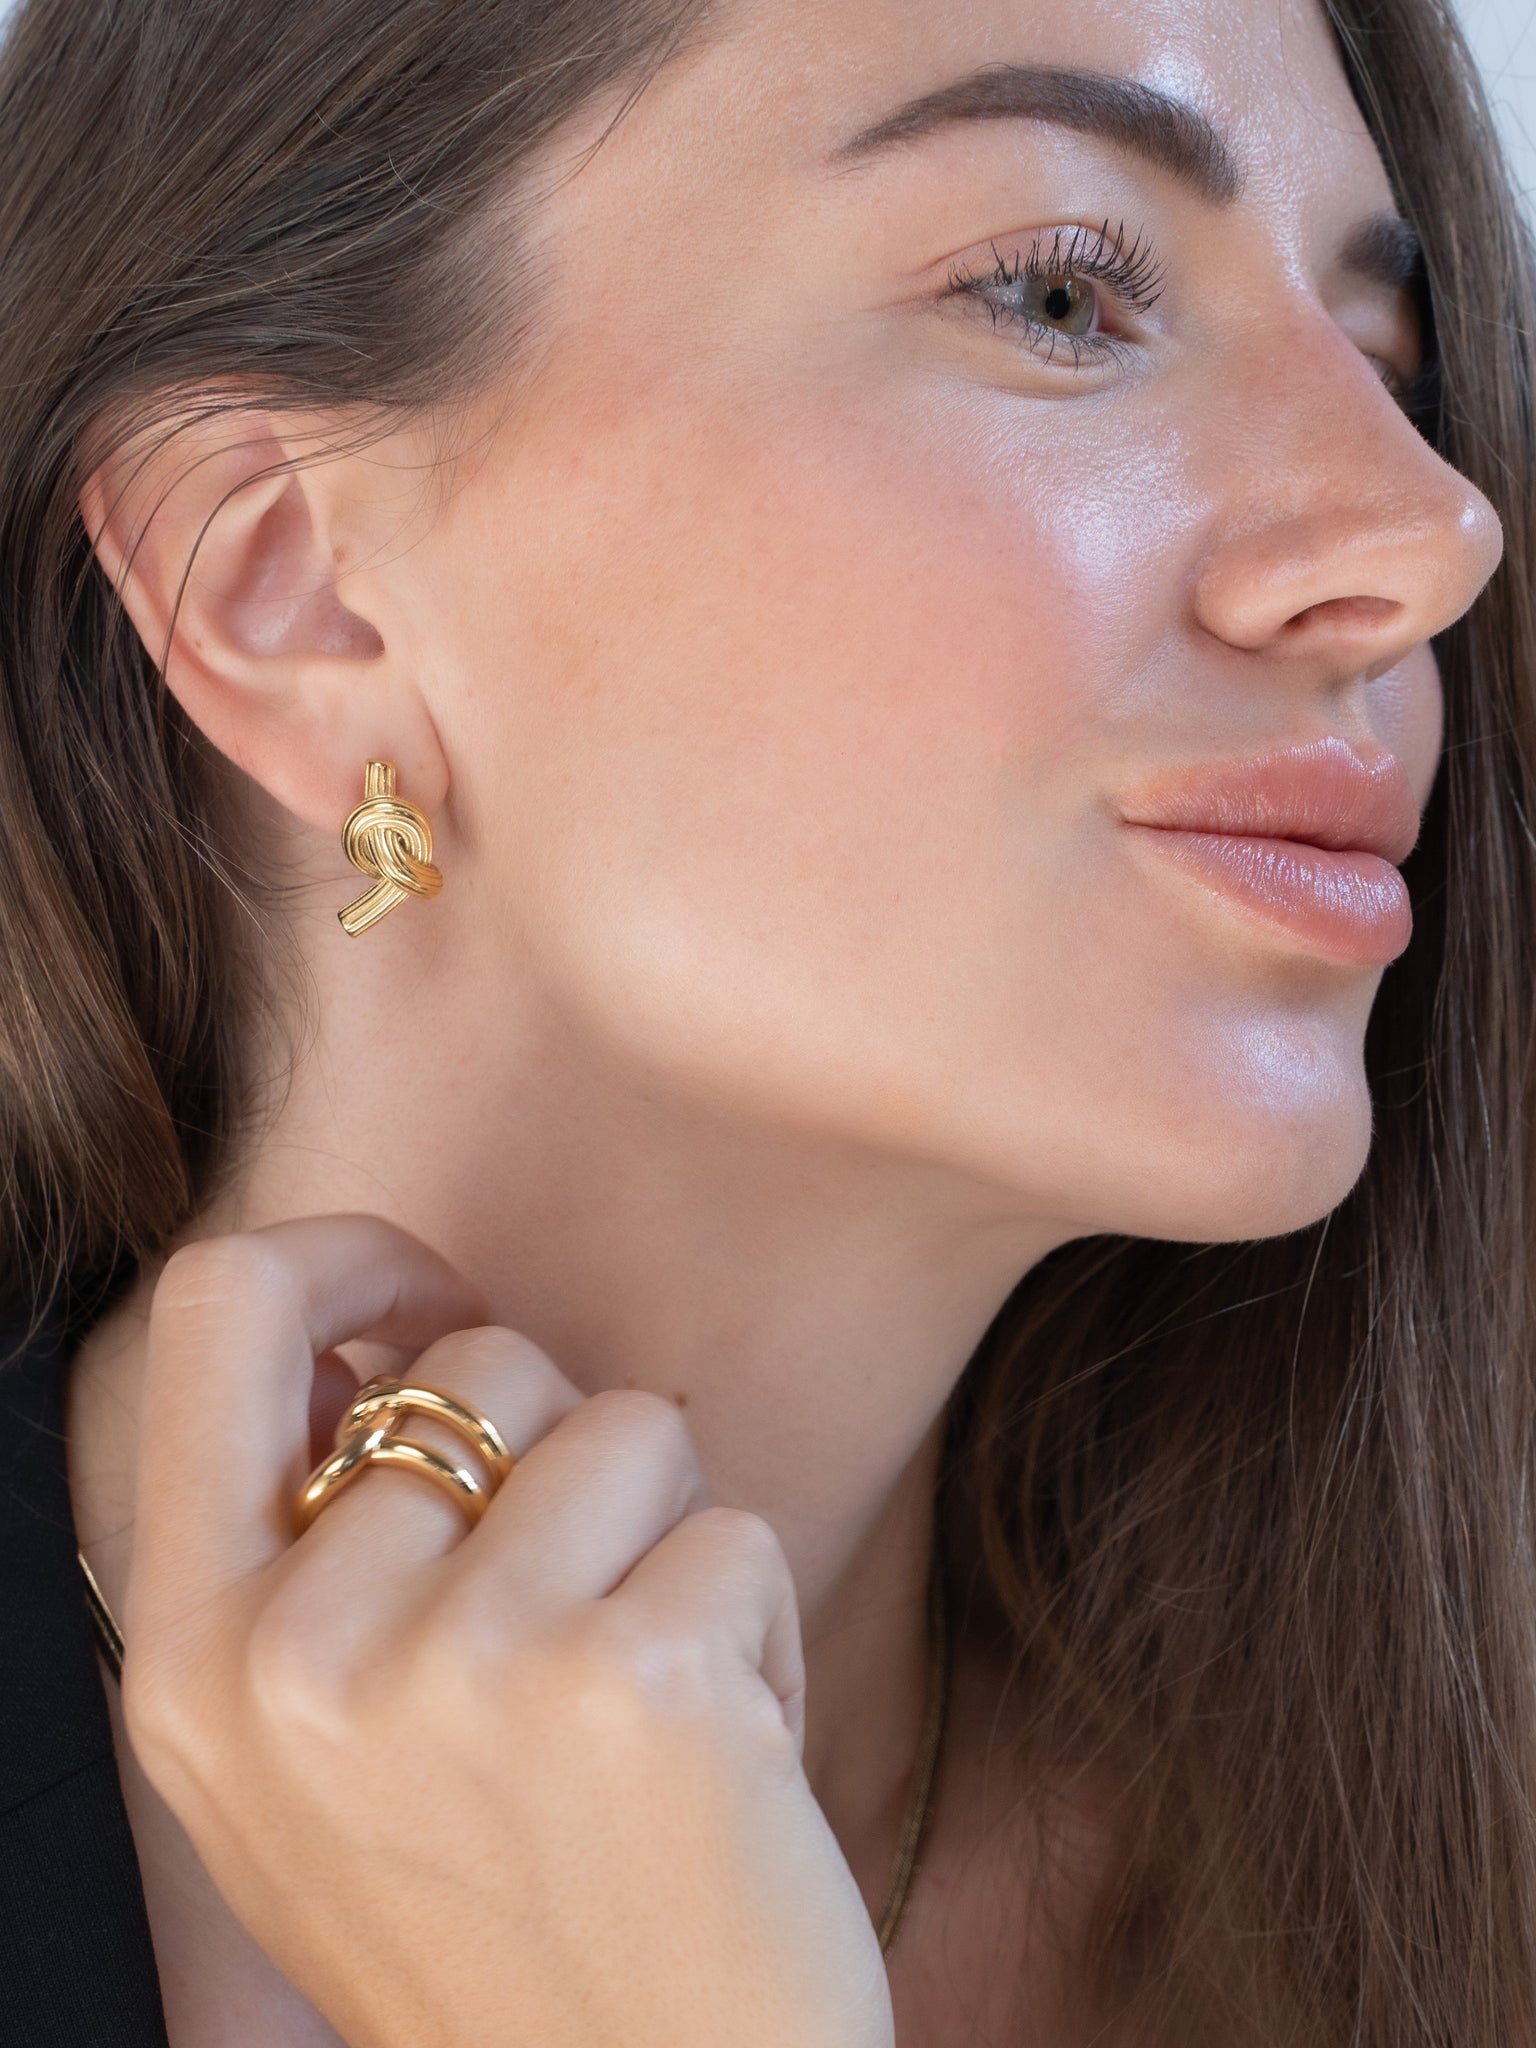 Love Knot Gold Earrings